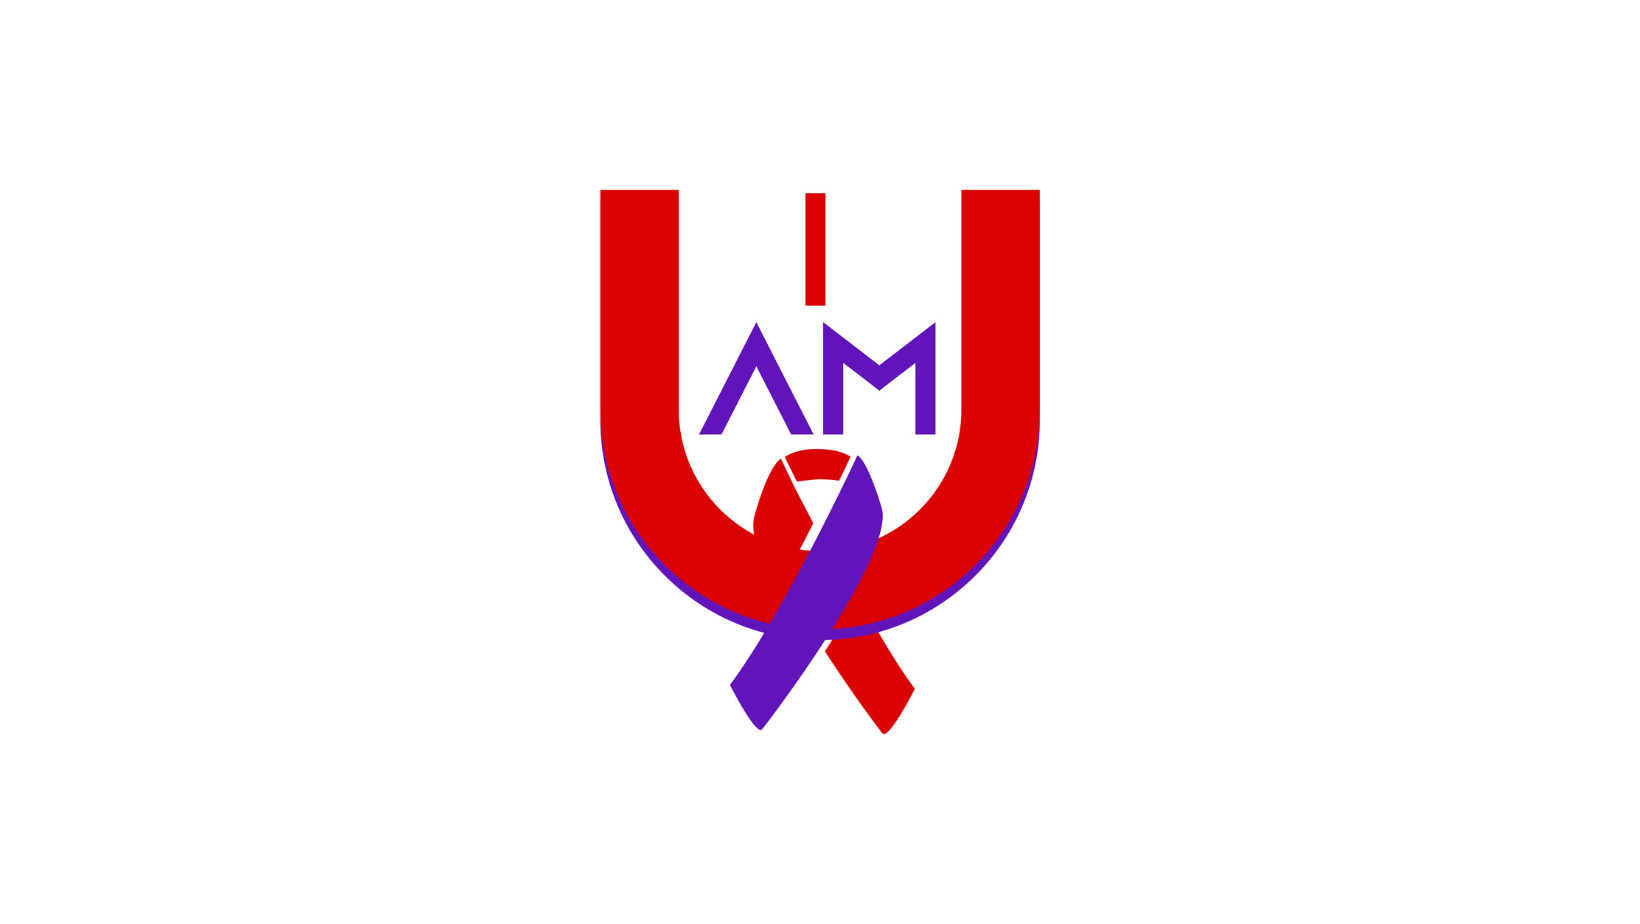 I Am U logo.